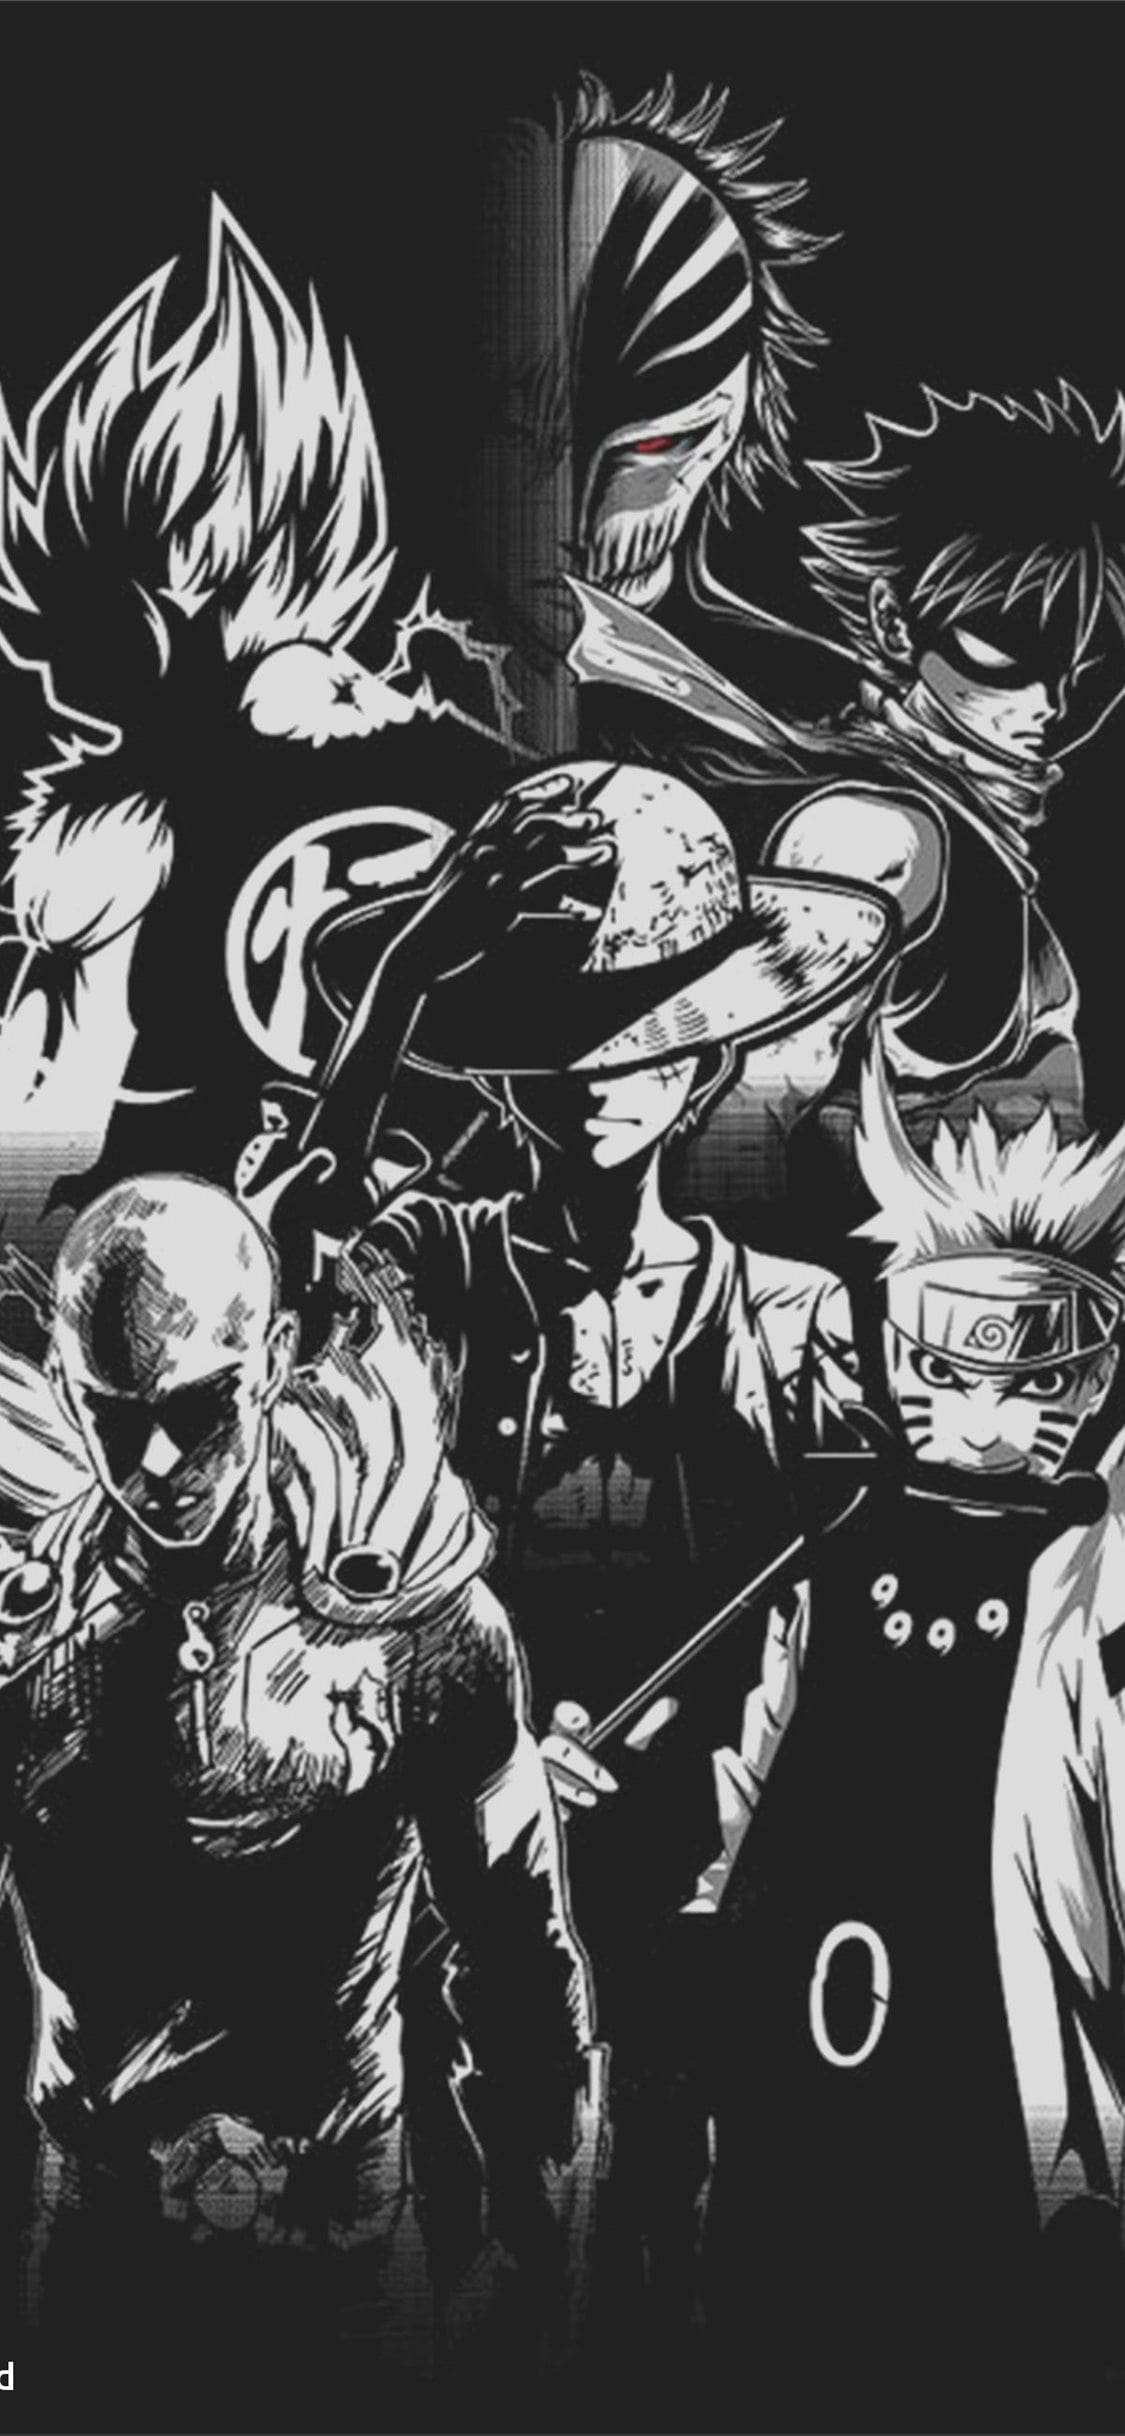 Black One Piece on Dog 4k wallpaper 1